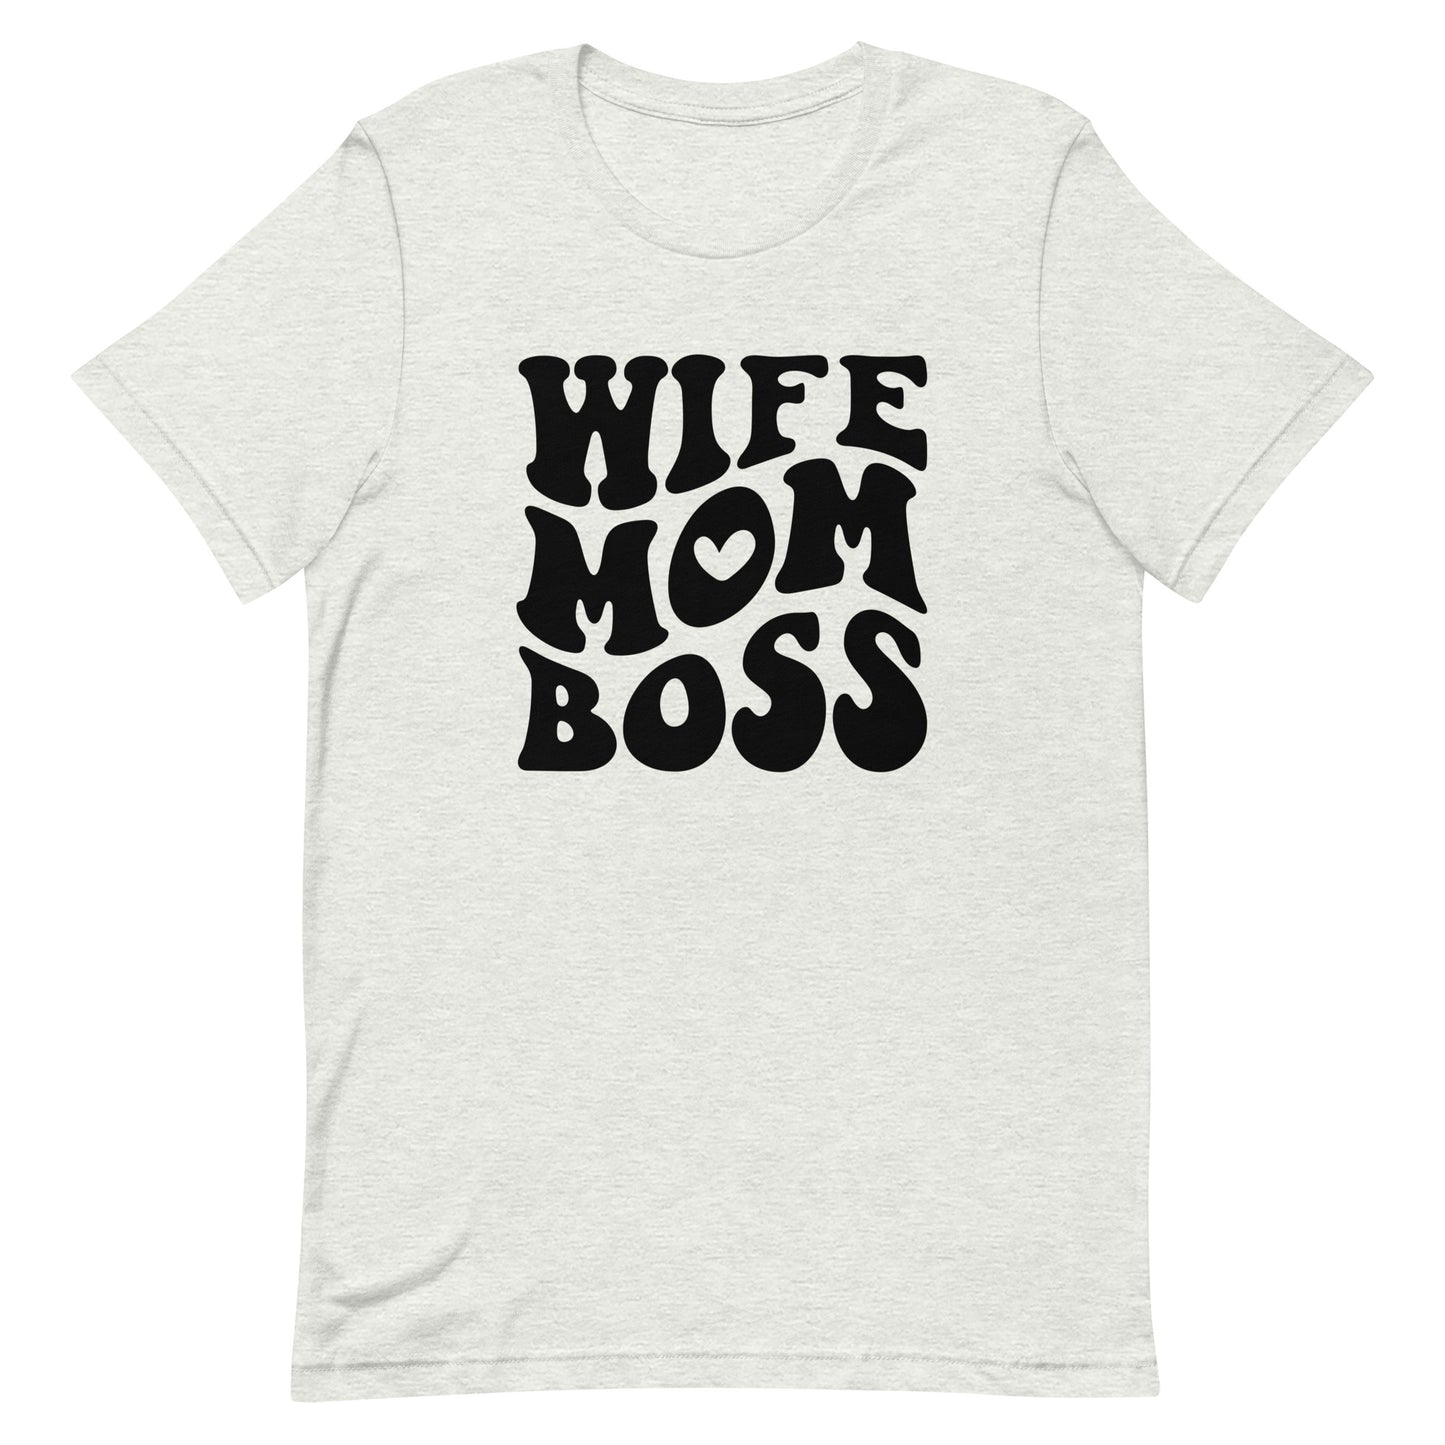 WIFE MOM BOSS - Unisex t-shirt